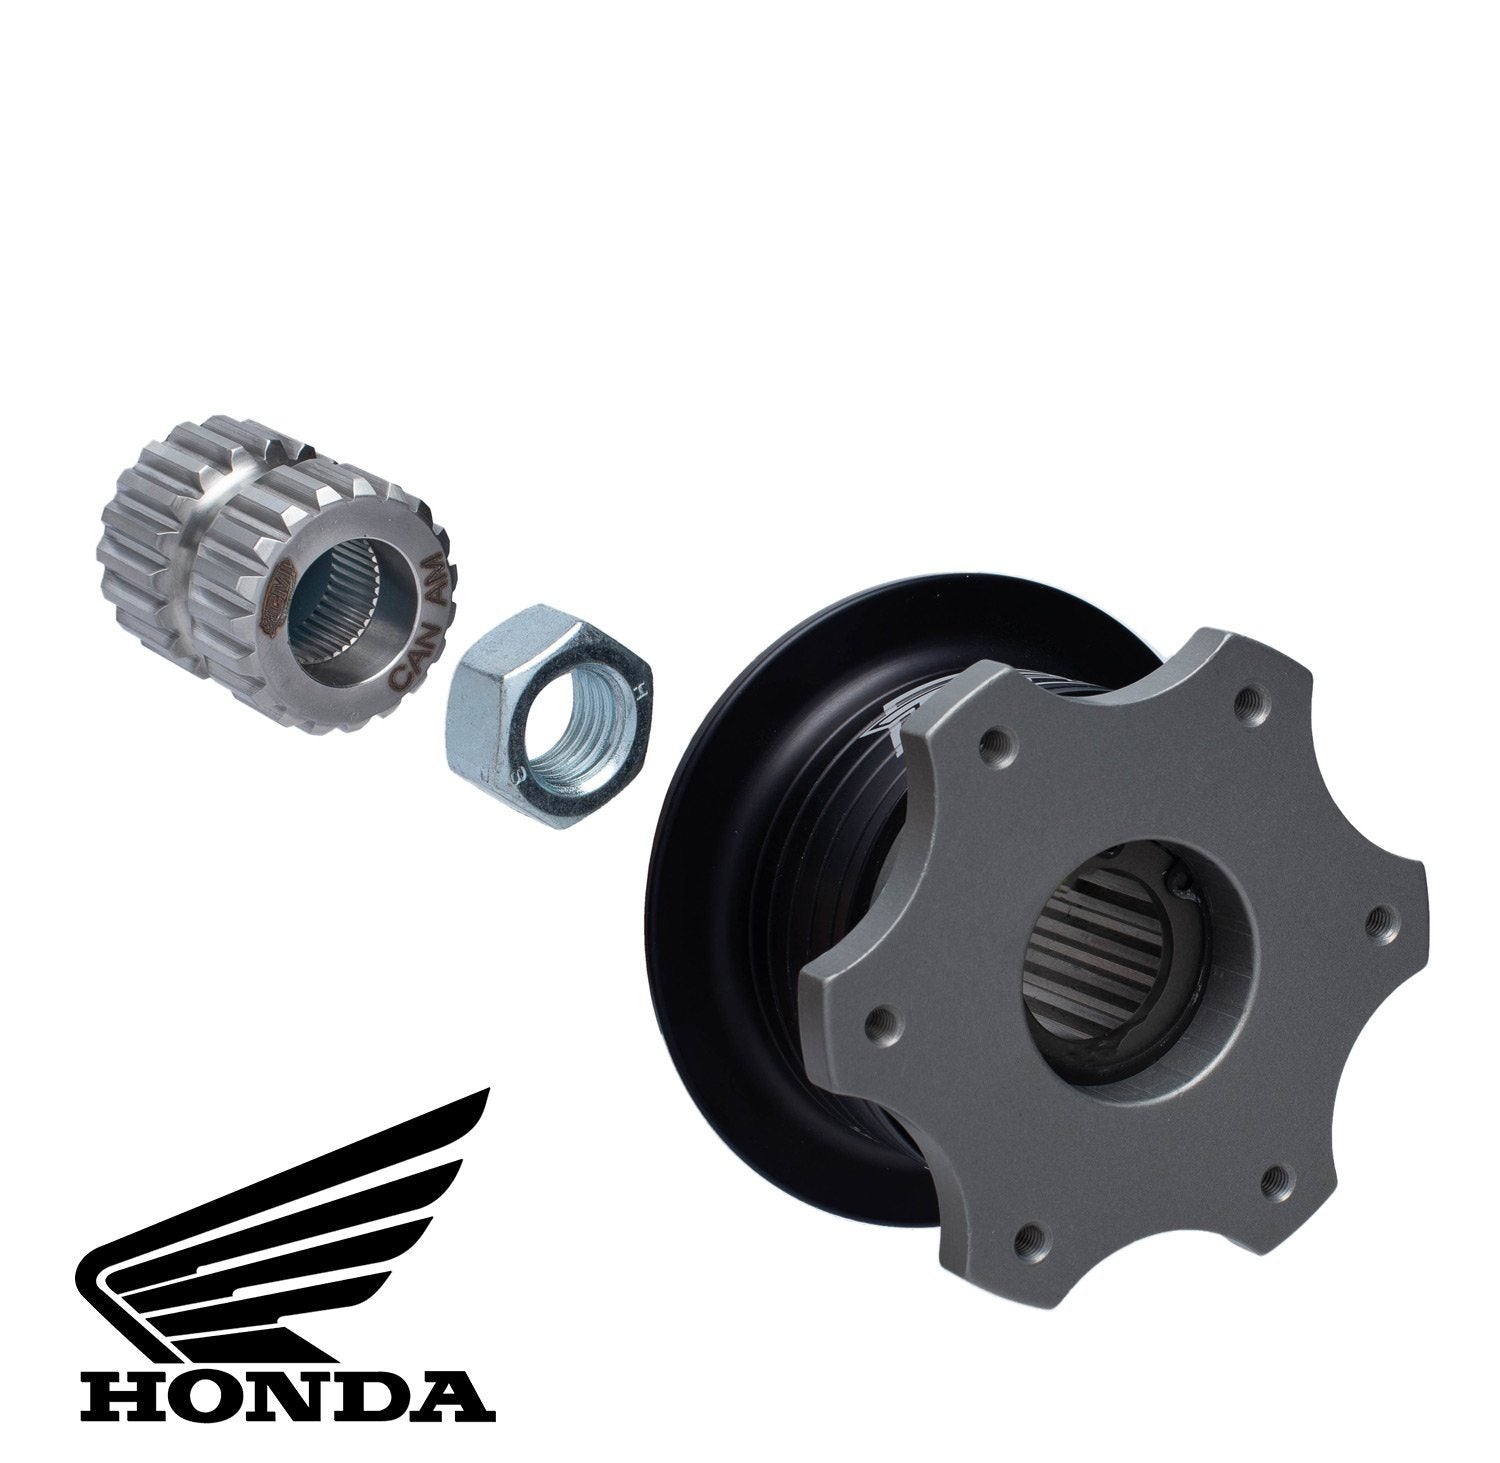 6 bolt aluminium Steering wheel Quick Release adapter-Honda MPI parts